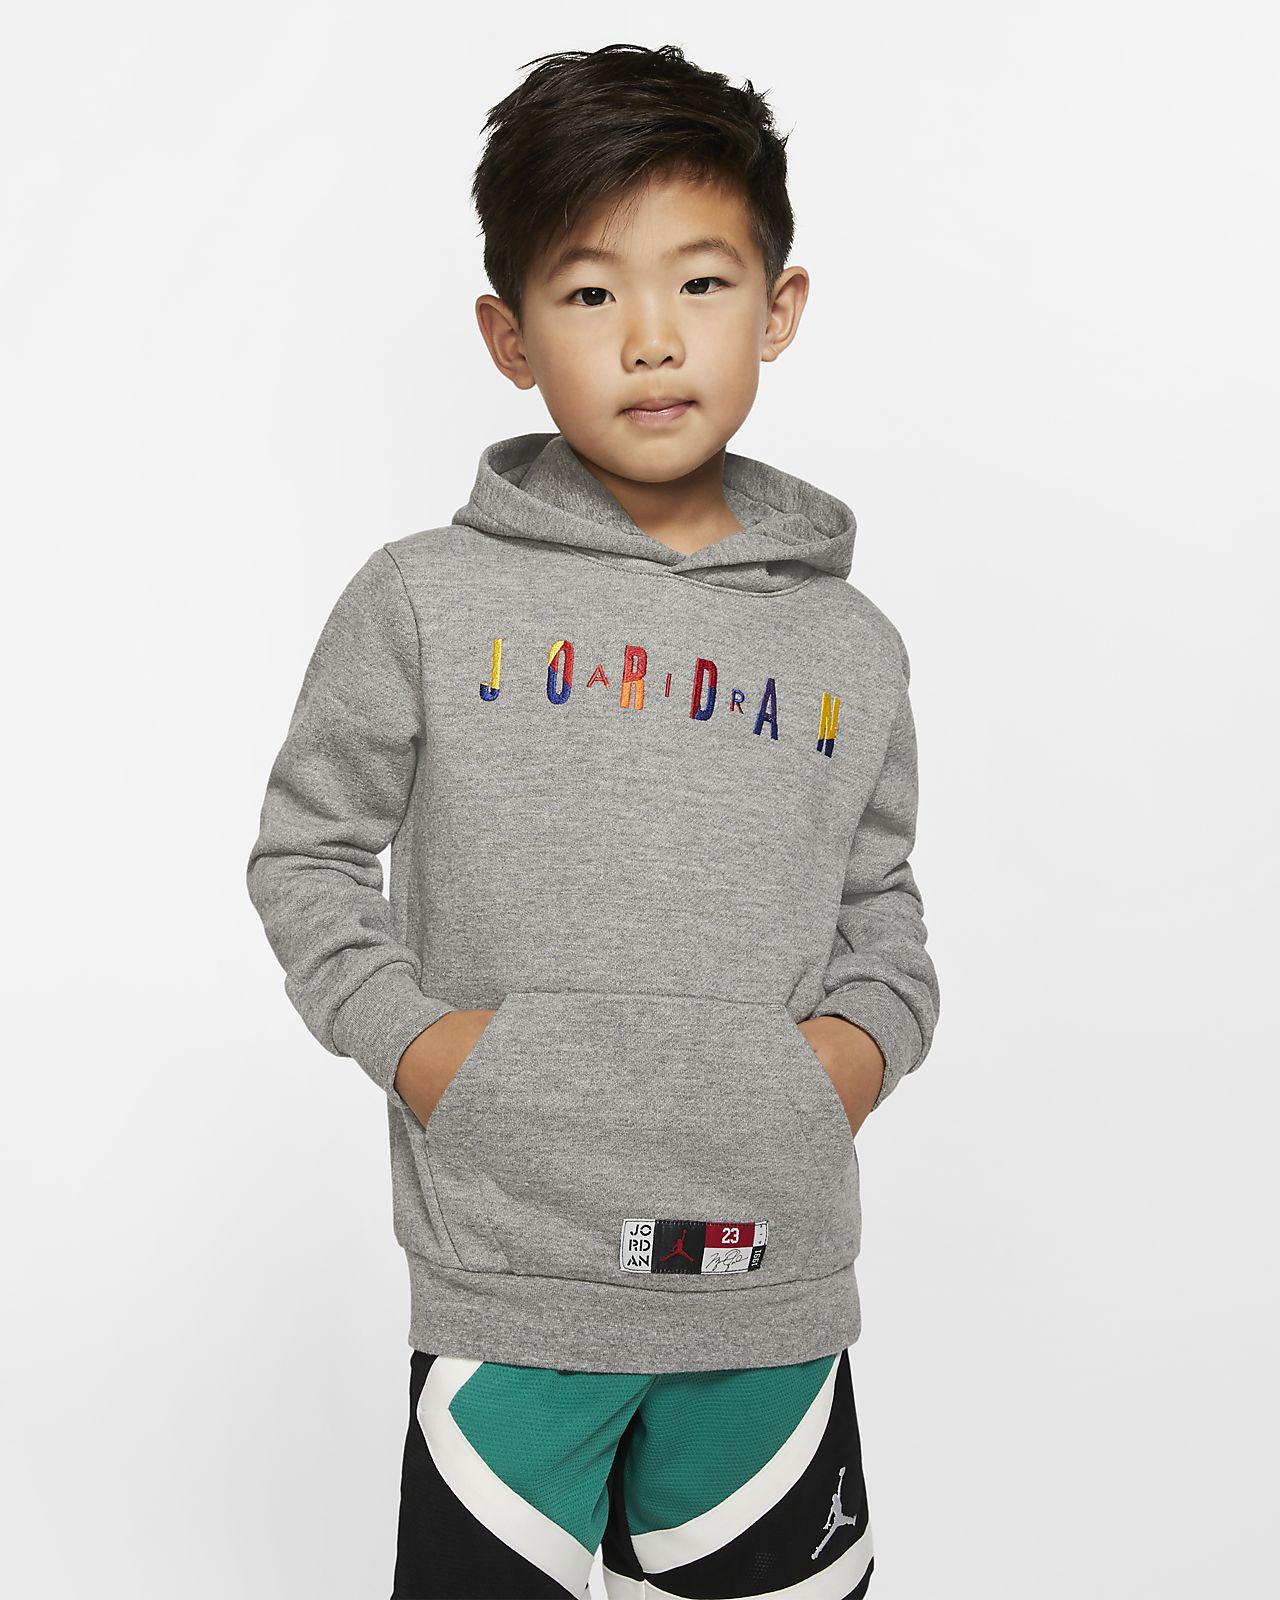 Kids Fleece Sweatshirt Sale, 52% OFF | www.pegasusaerogroup.com